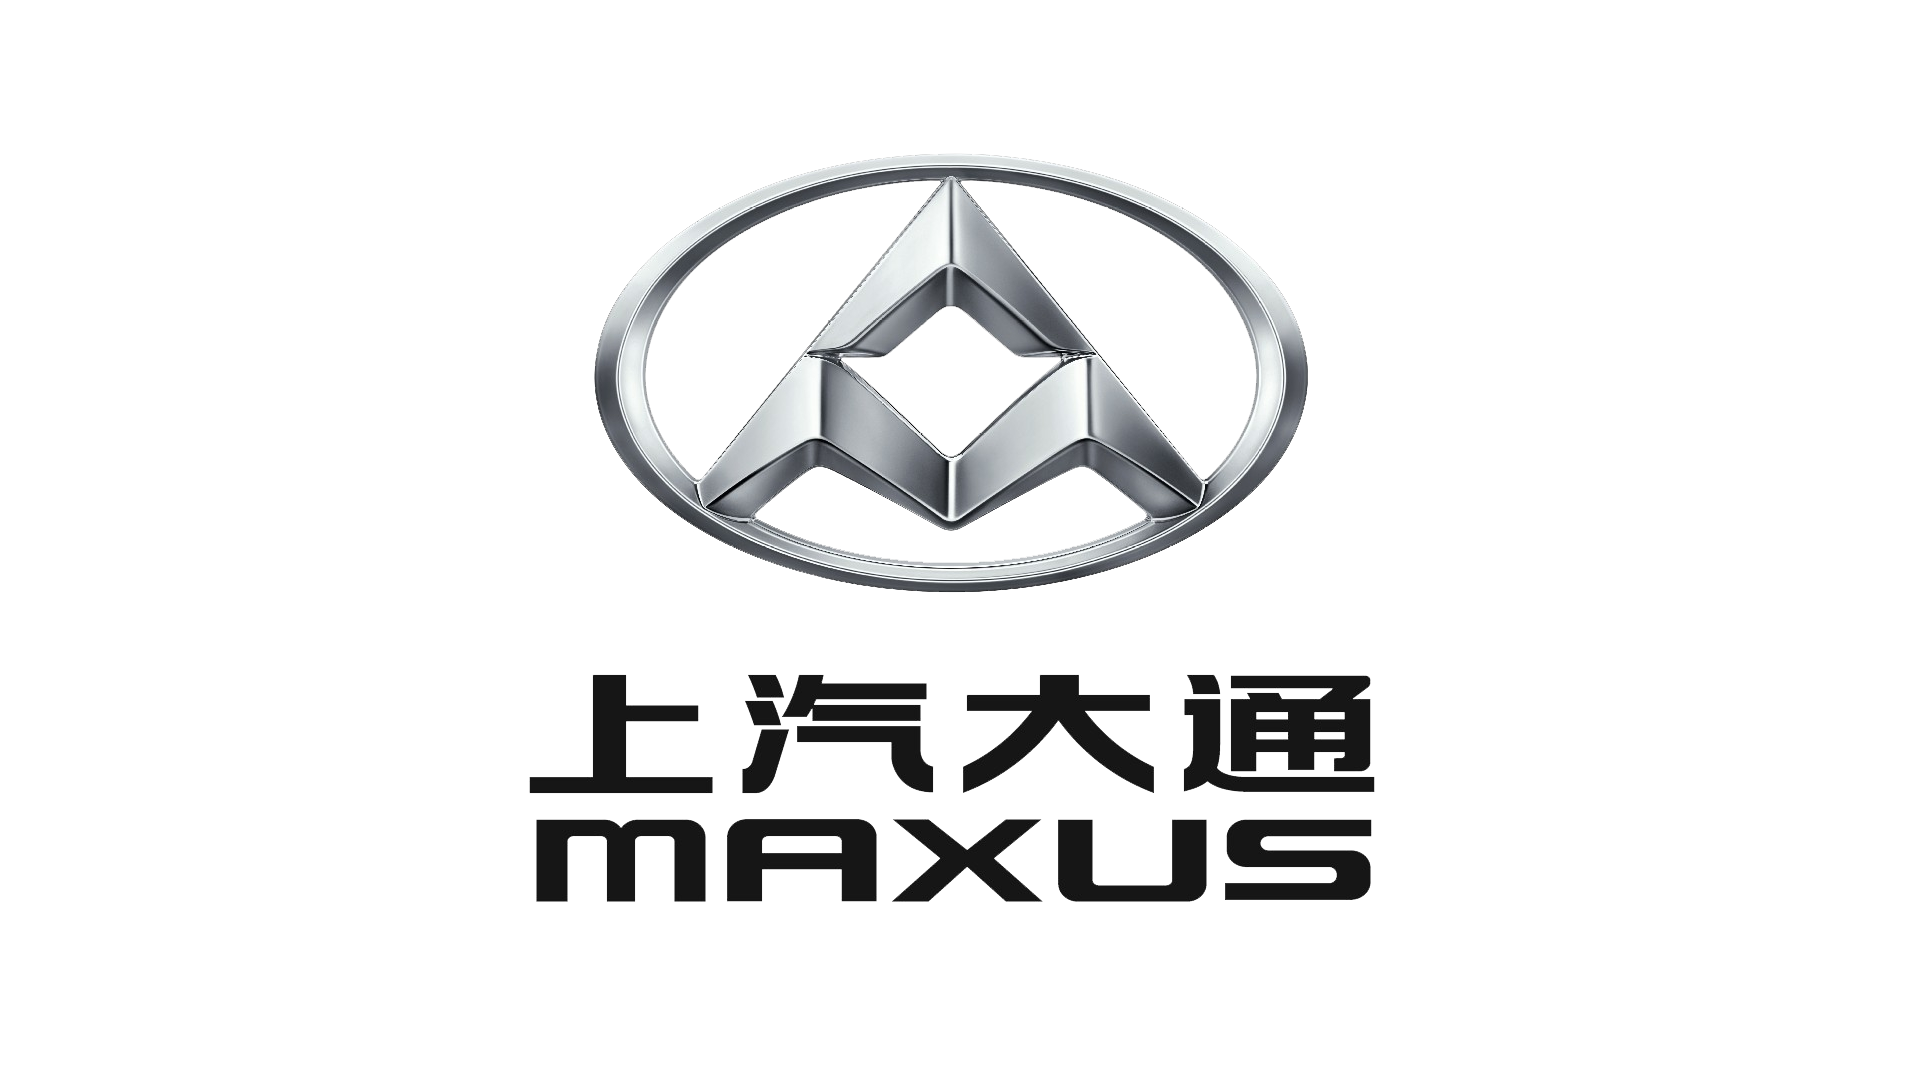 Maxus Logo, HD Png, Information | vlr.eng.br